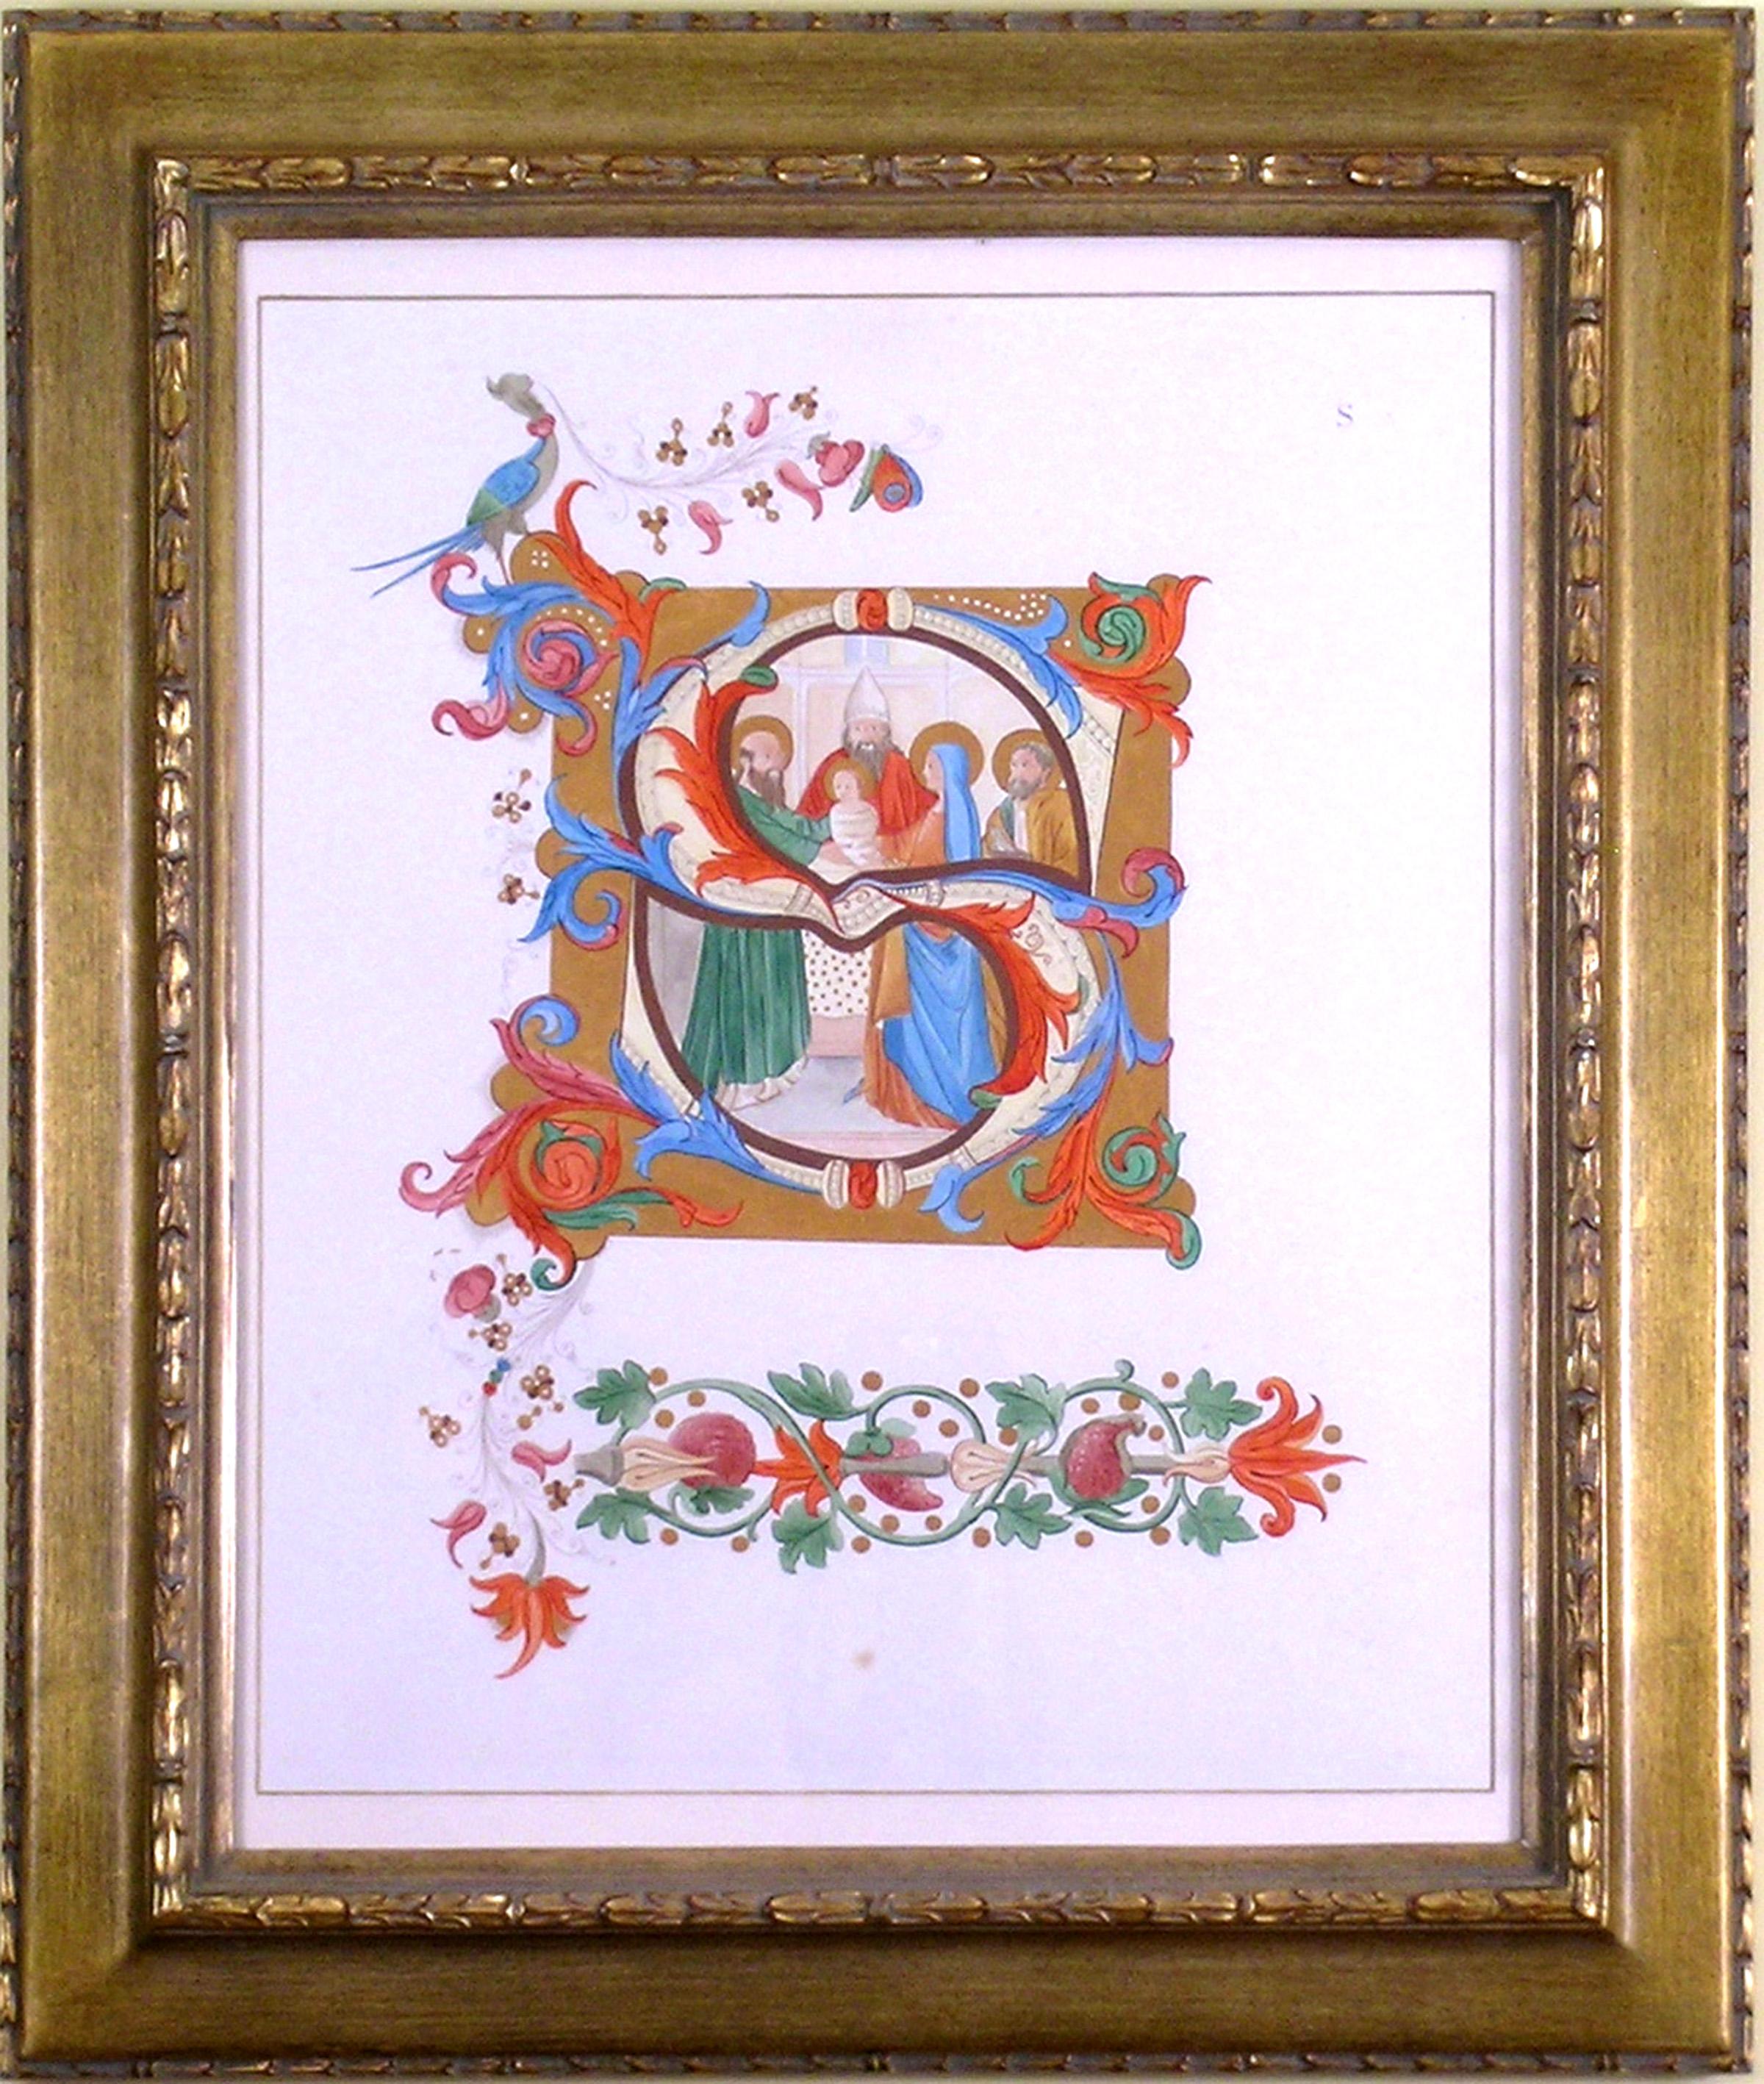 Alphabet Letter "S", Saint, Religious